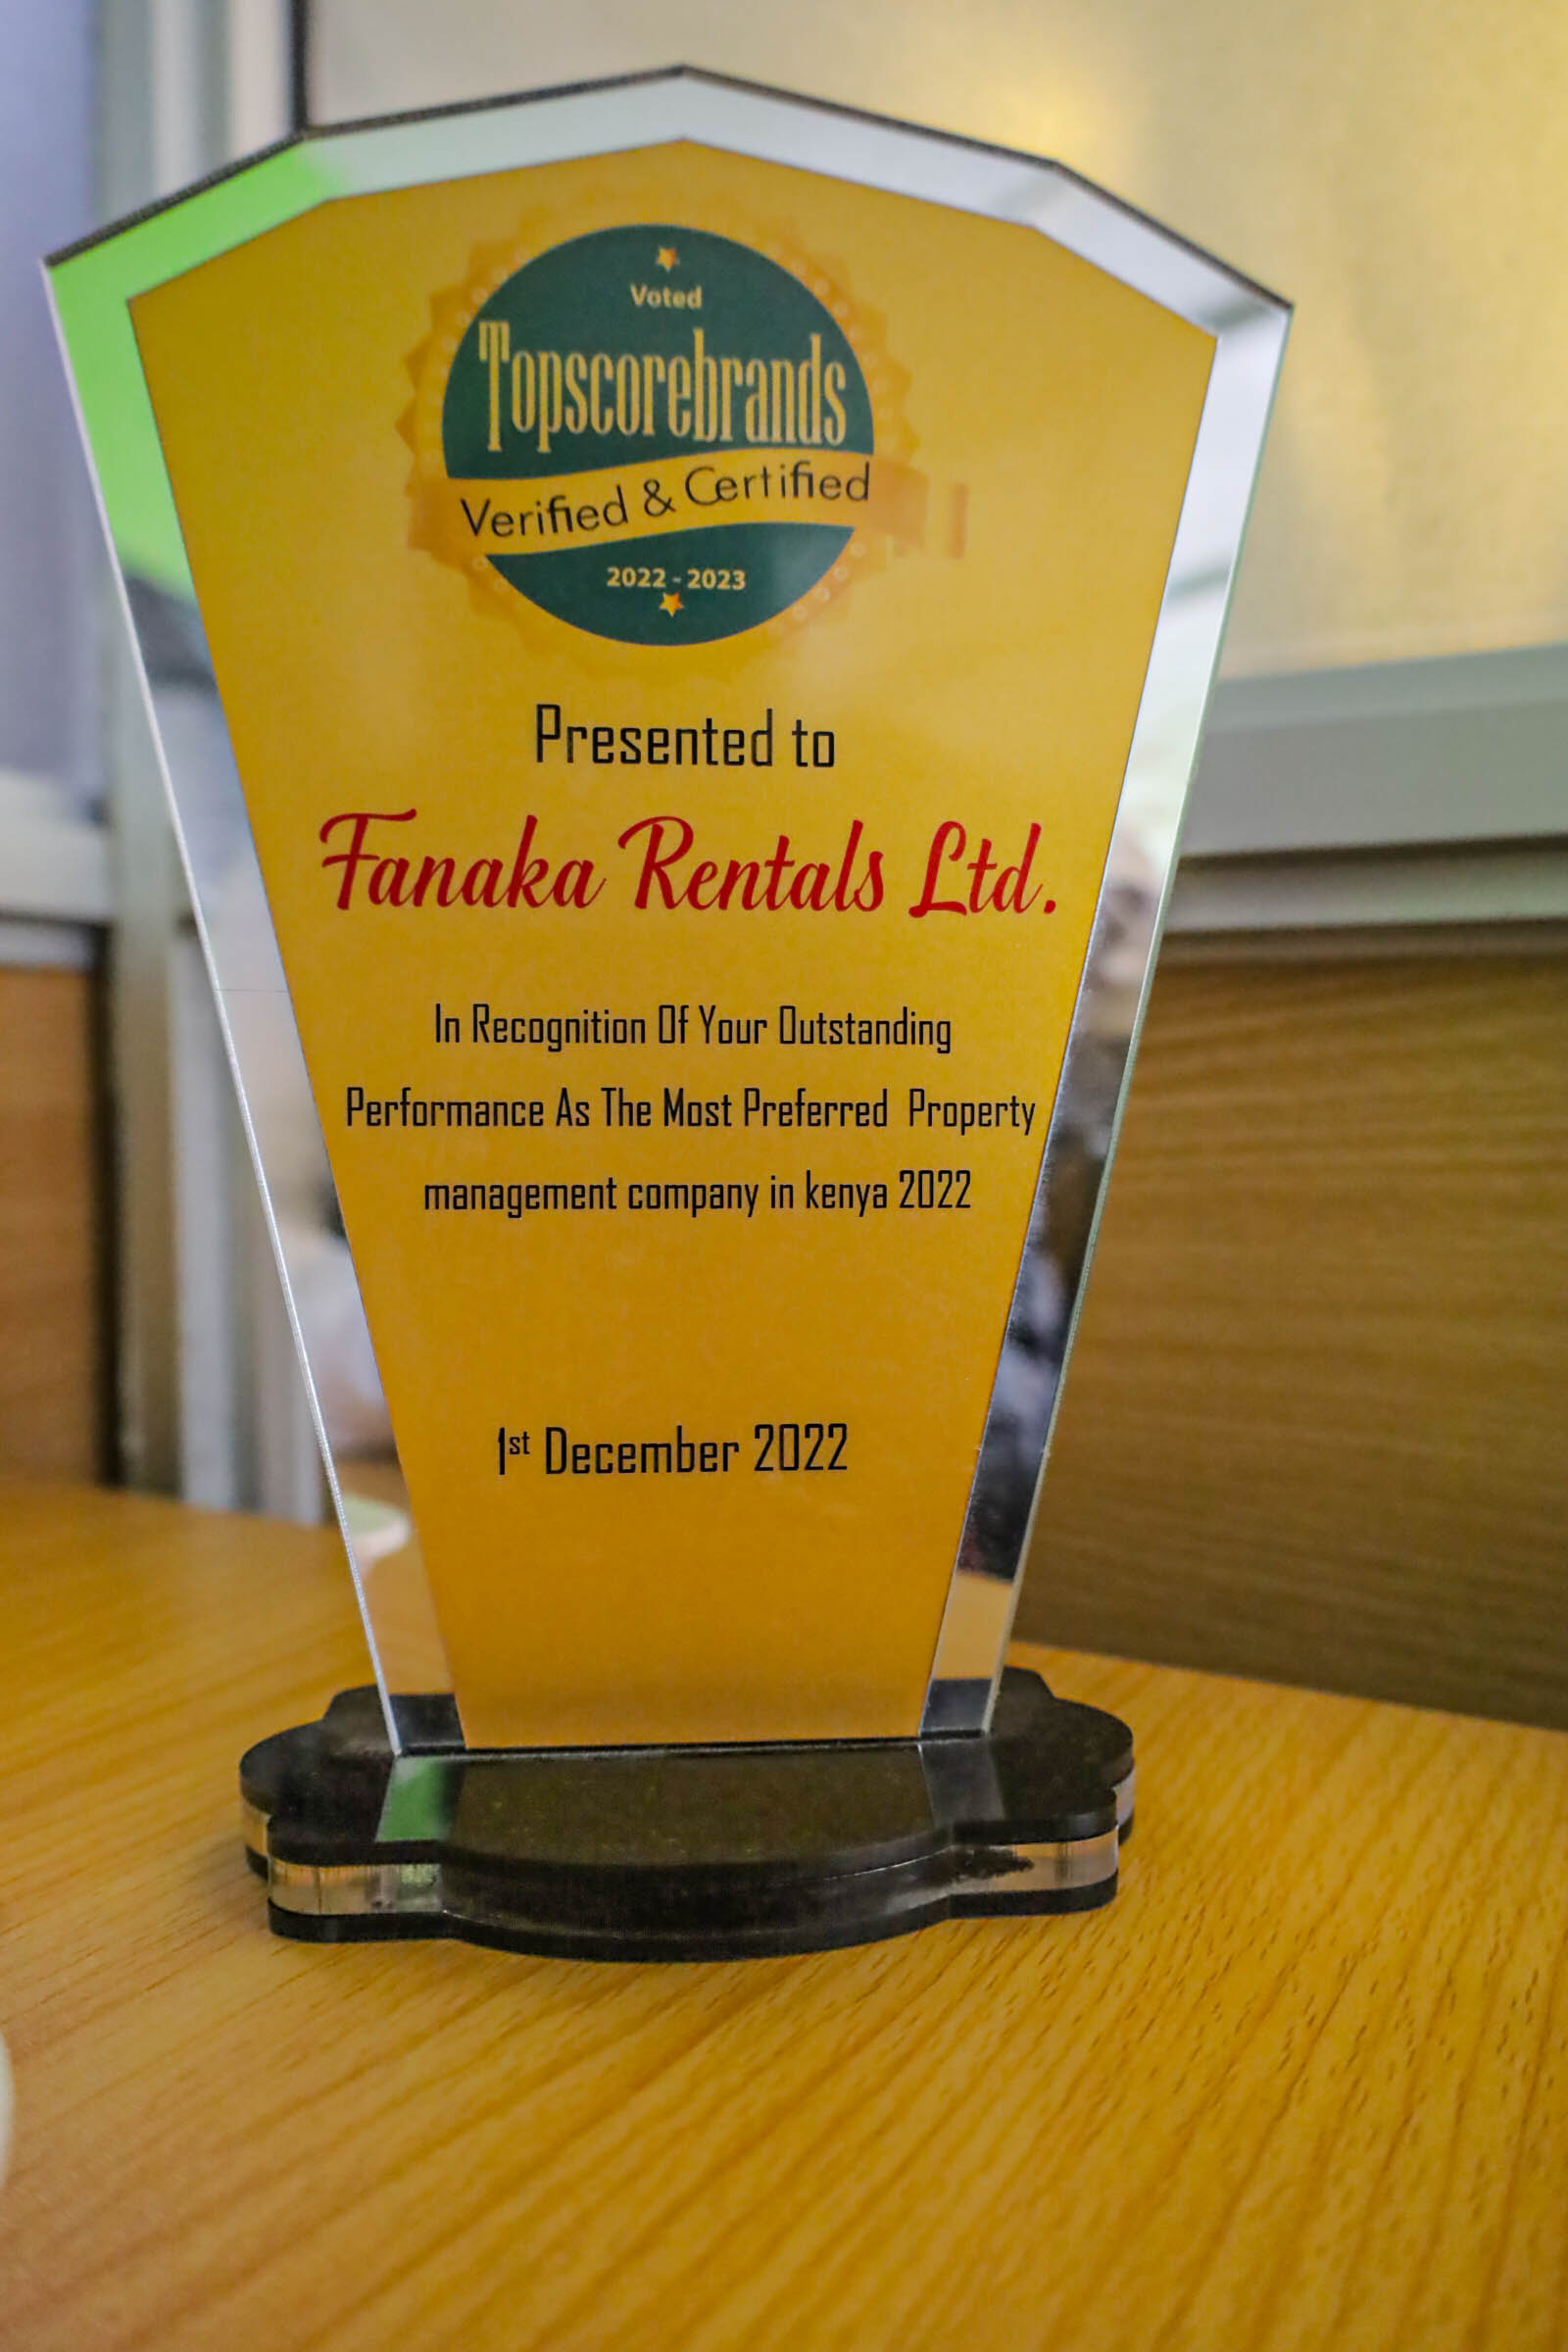 Fanaka Real Estated Award wining Real estated company in Kenya